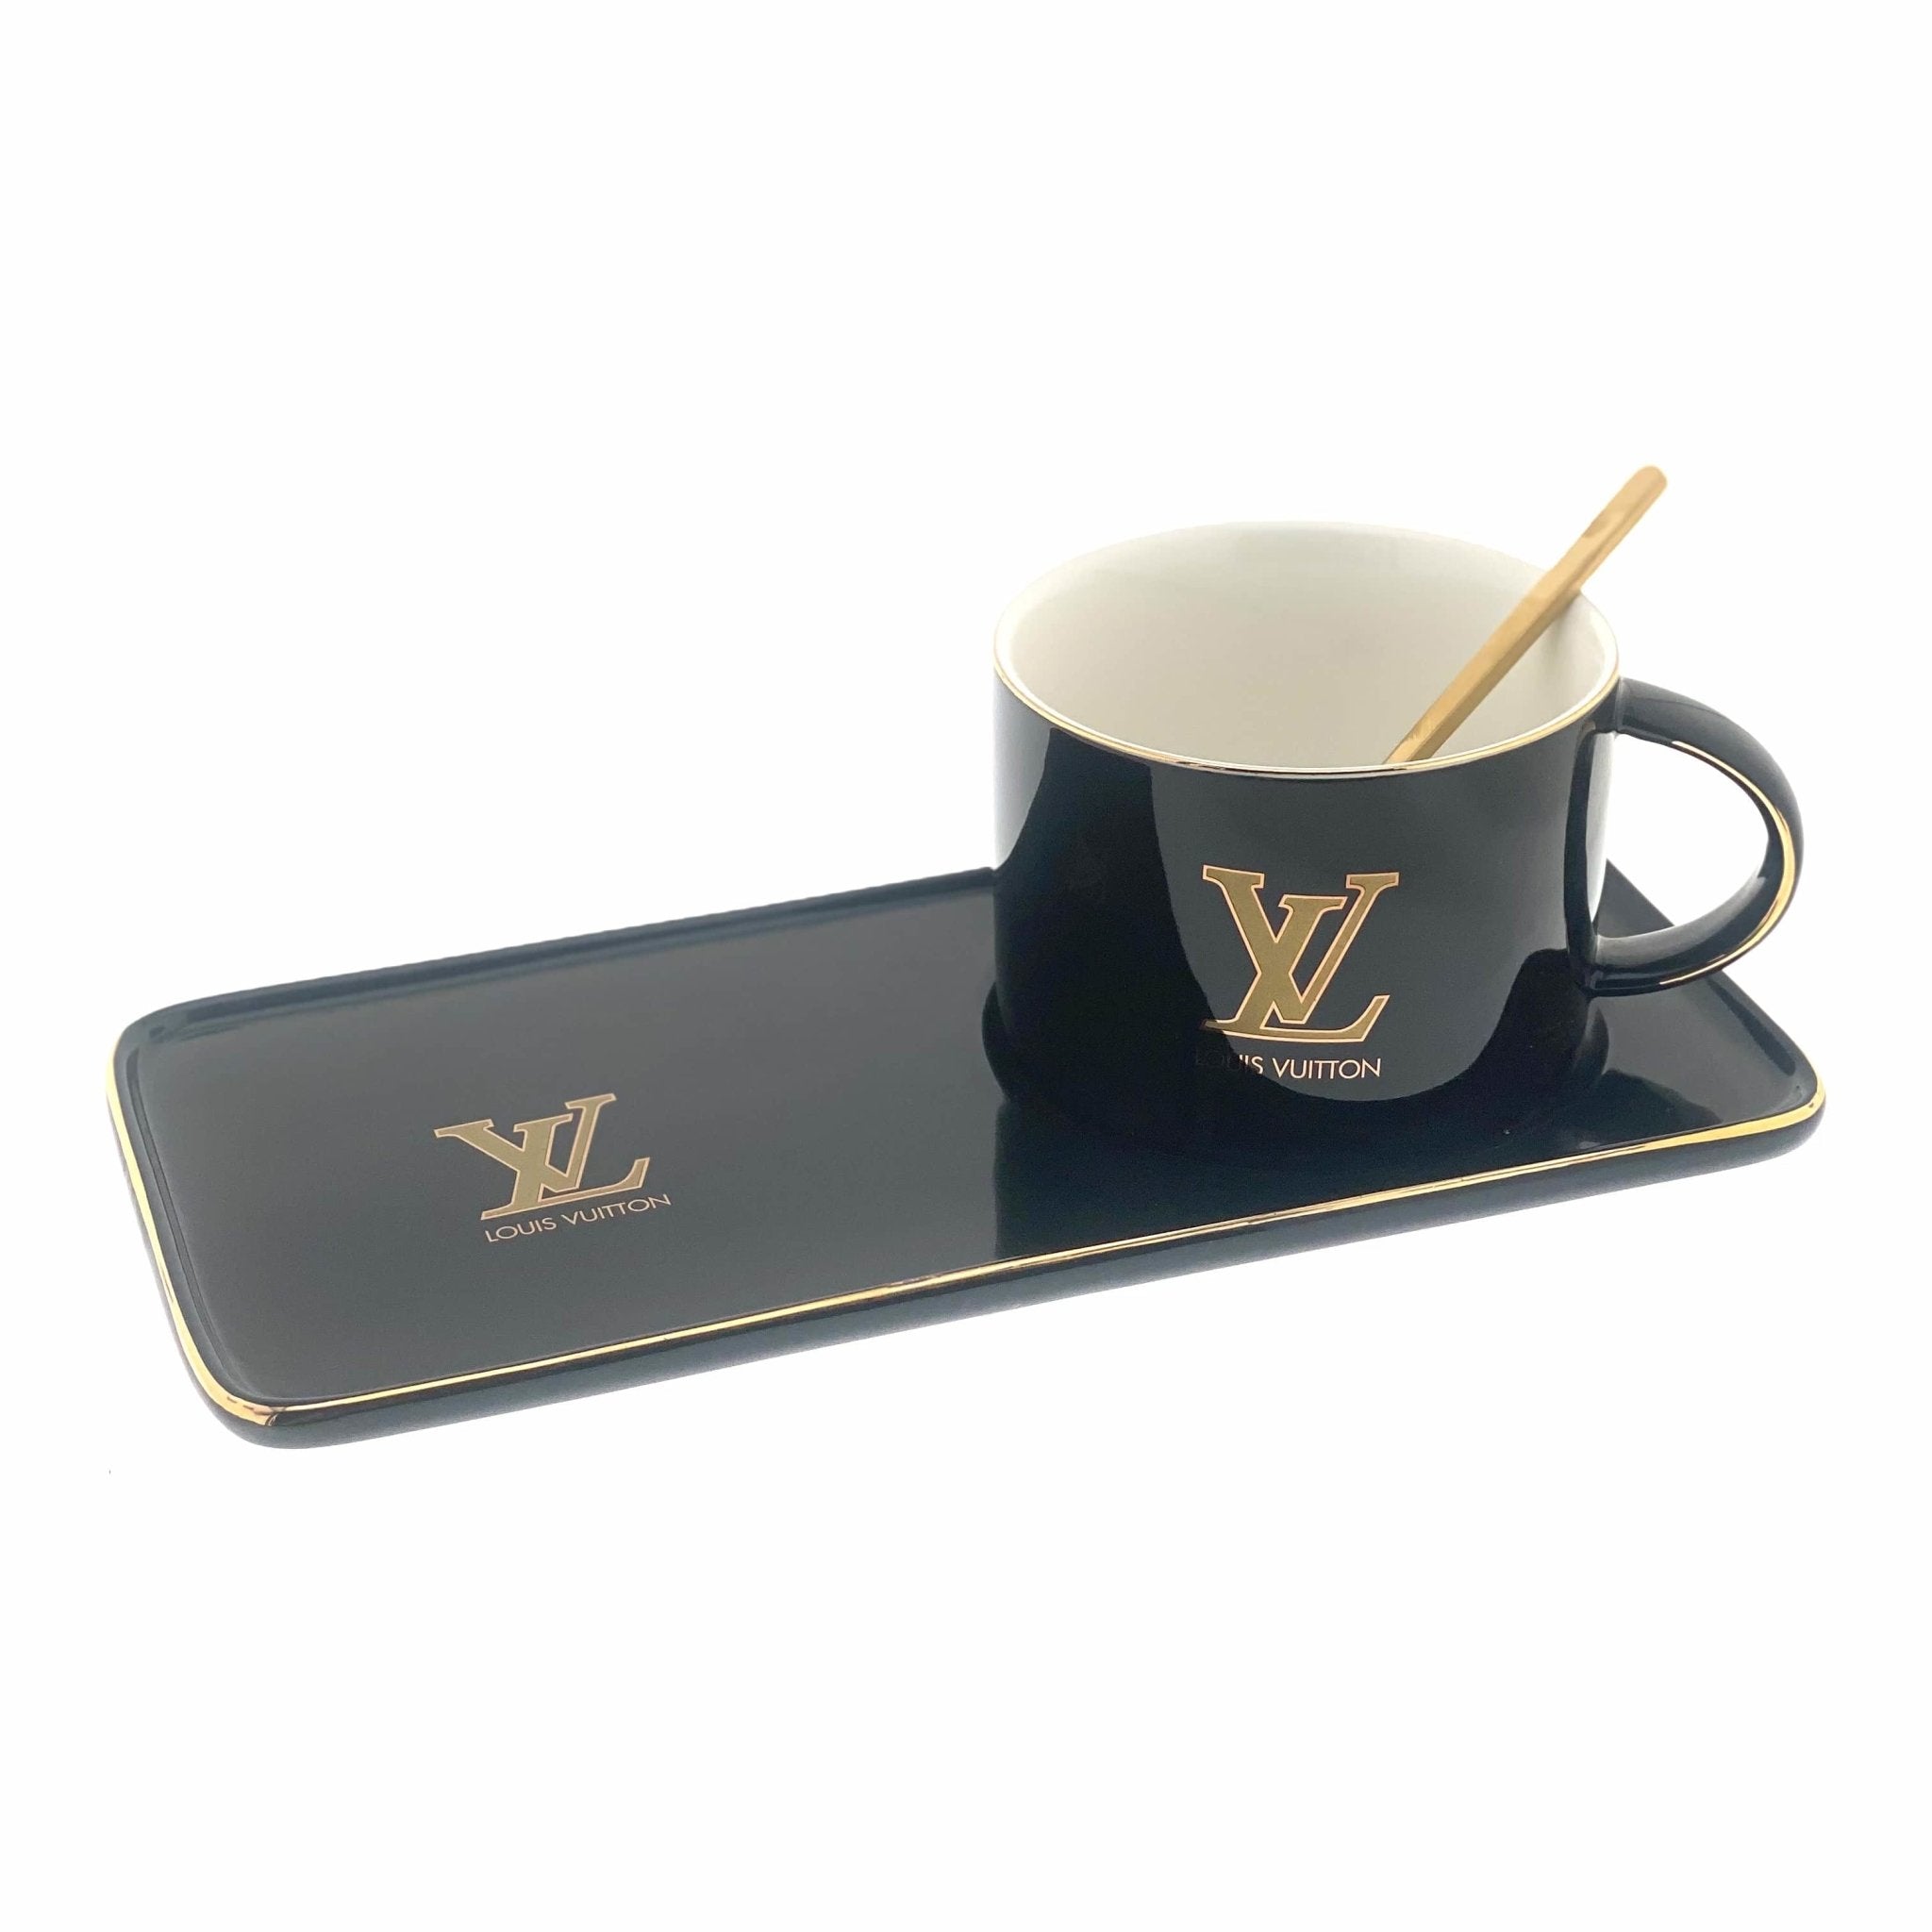 Louis Vuitton Mug with Serving Dish